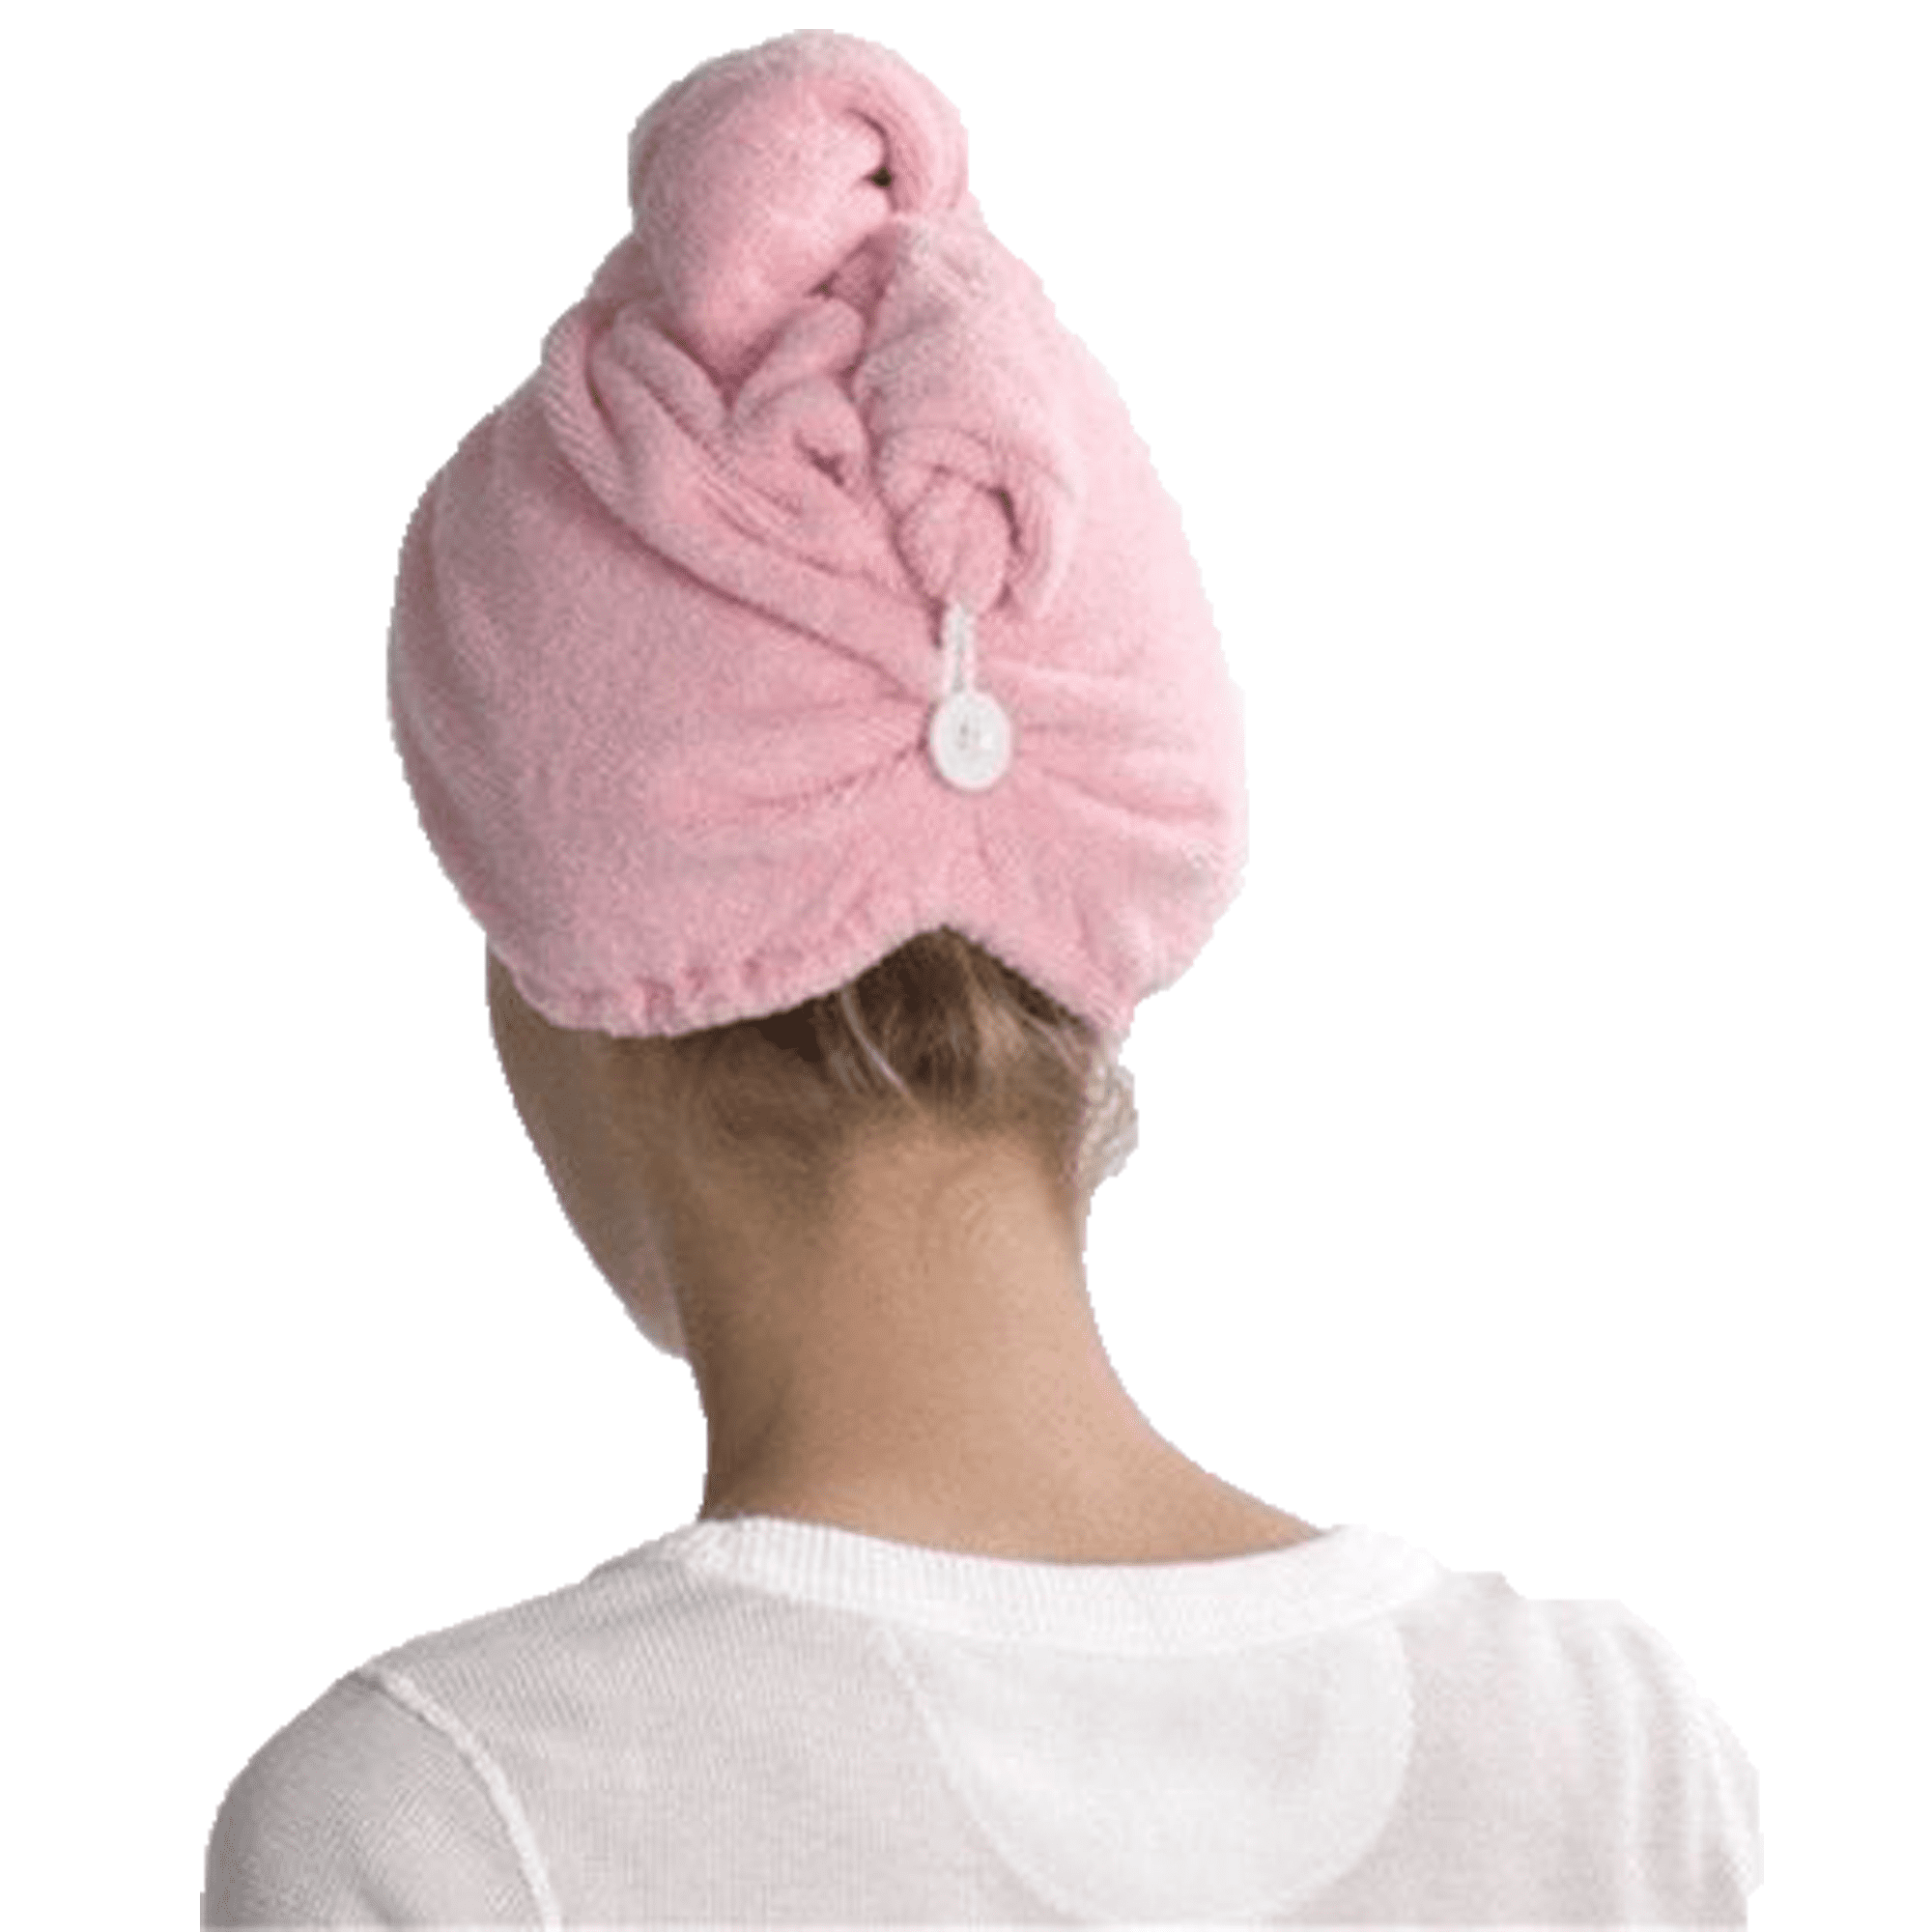 LATEST QUICK DRY MAGIC HAIR TURBAN TOWEL MICROFIBRE HAIR WRAP BATH TOWEL CAP HAT 